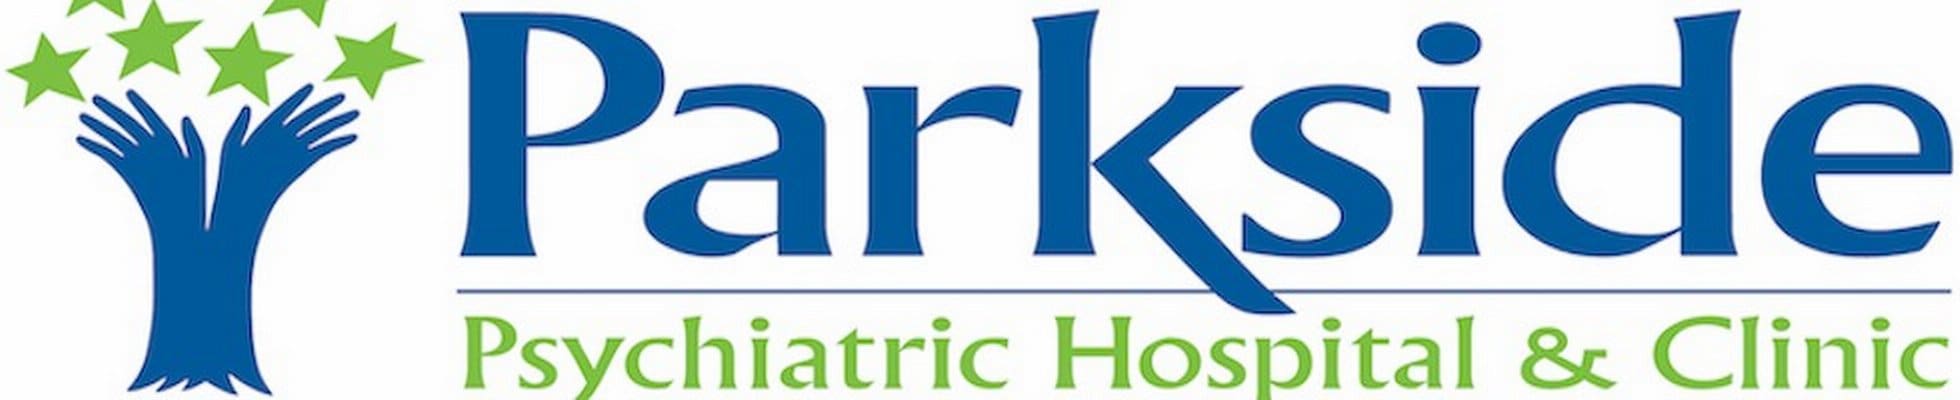 Parkside Psychiatric Hospital & Clinic : Brand Short Description Type Here.